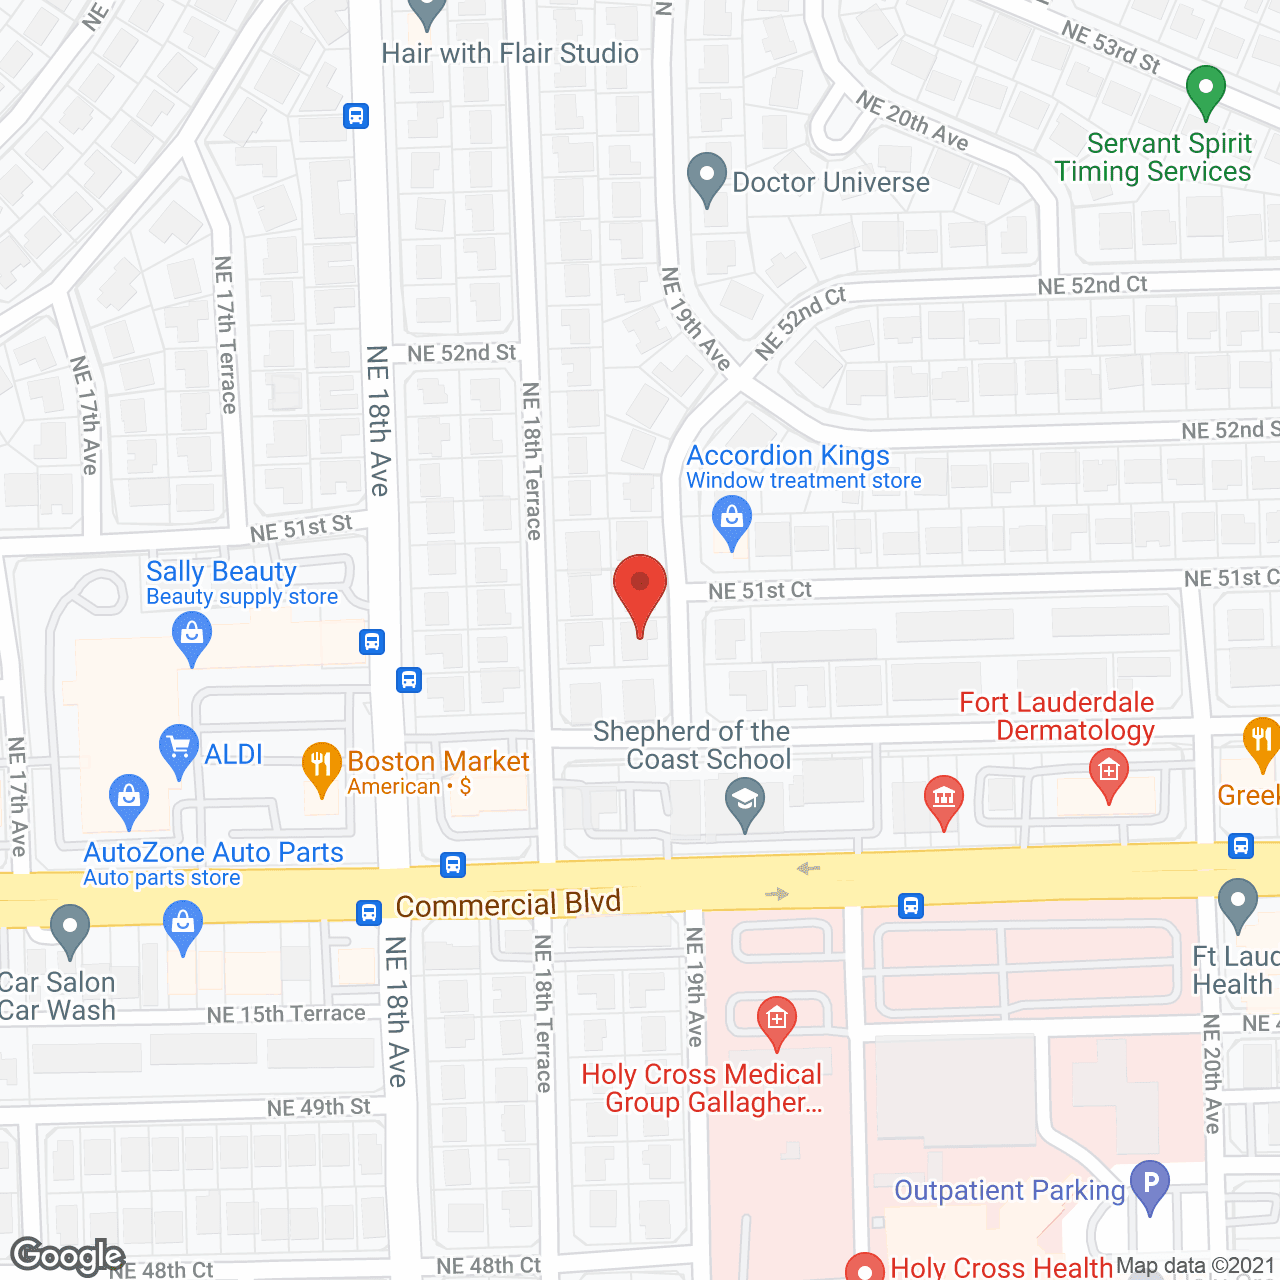 Royal Palm Senior Residence in google map